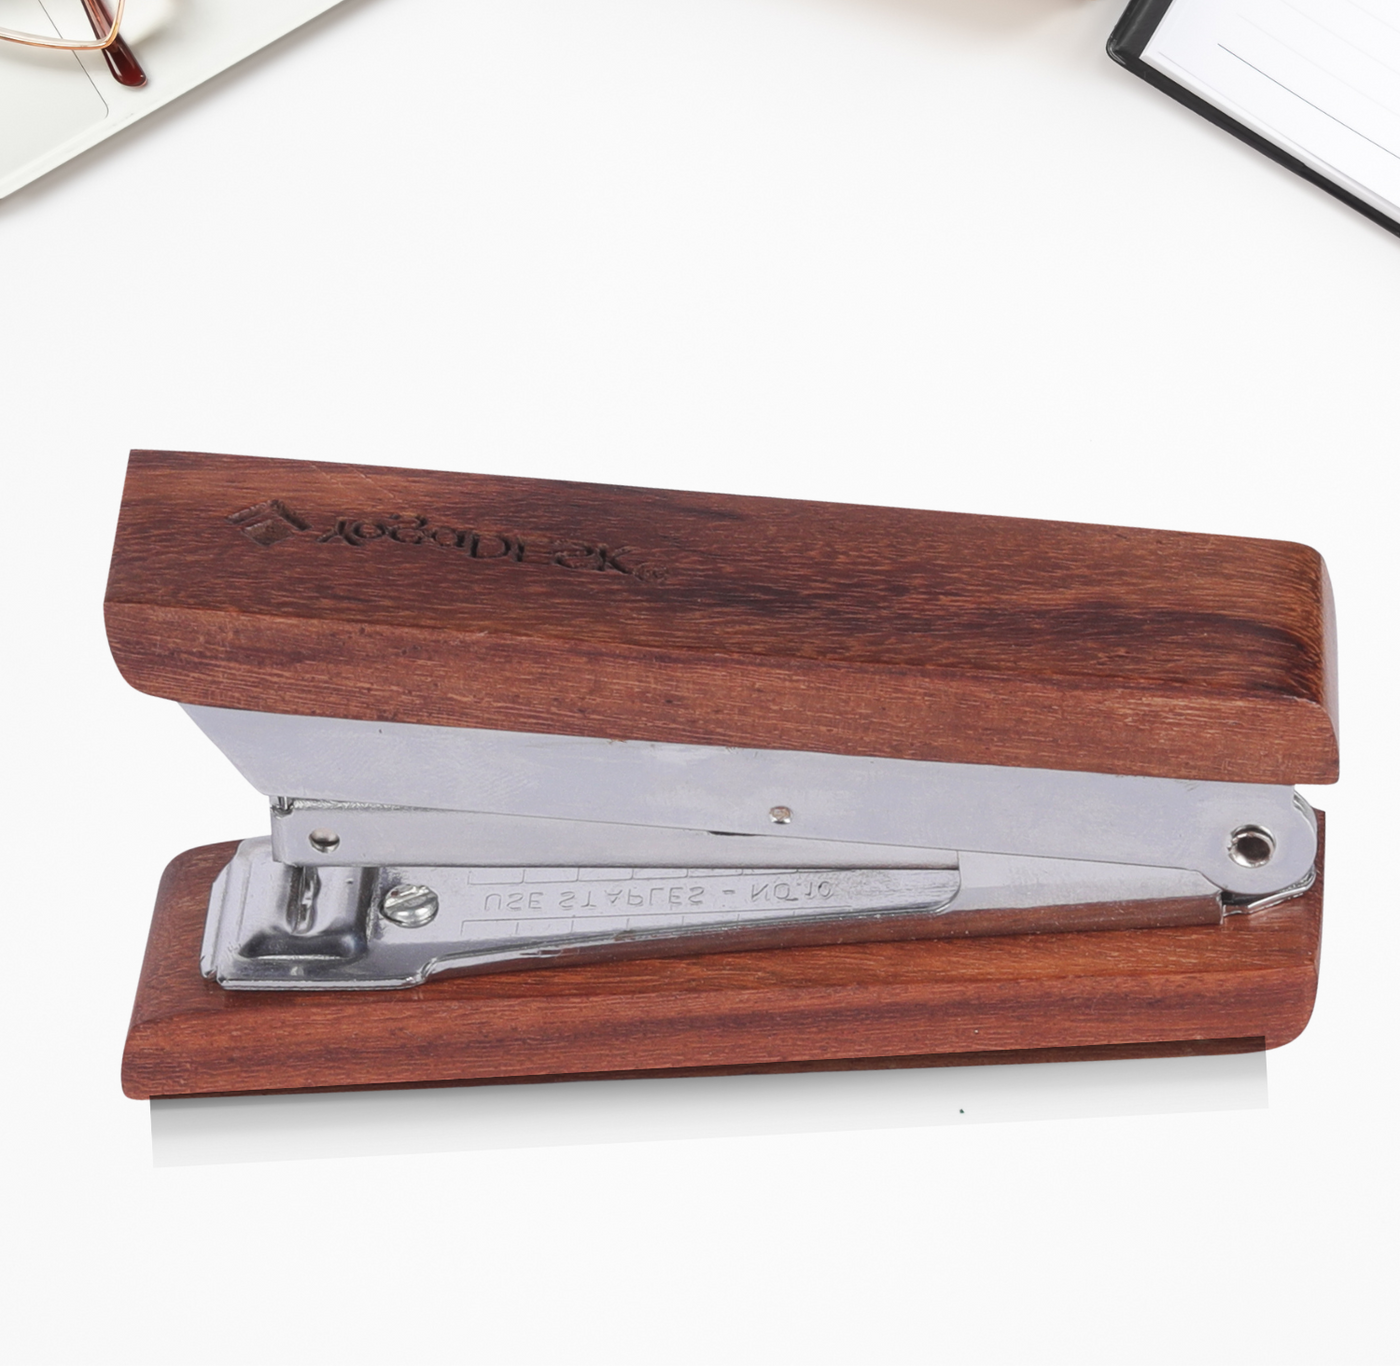 stapler unique gifts wooden stapler 